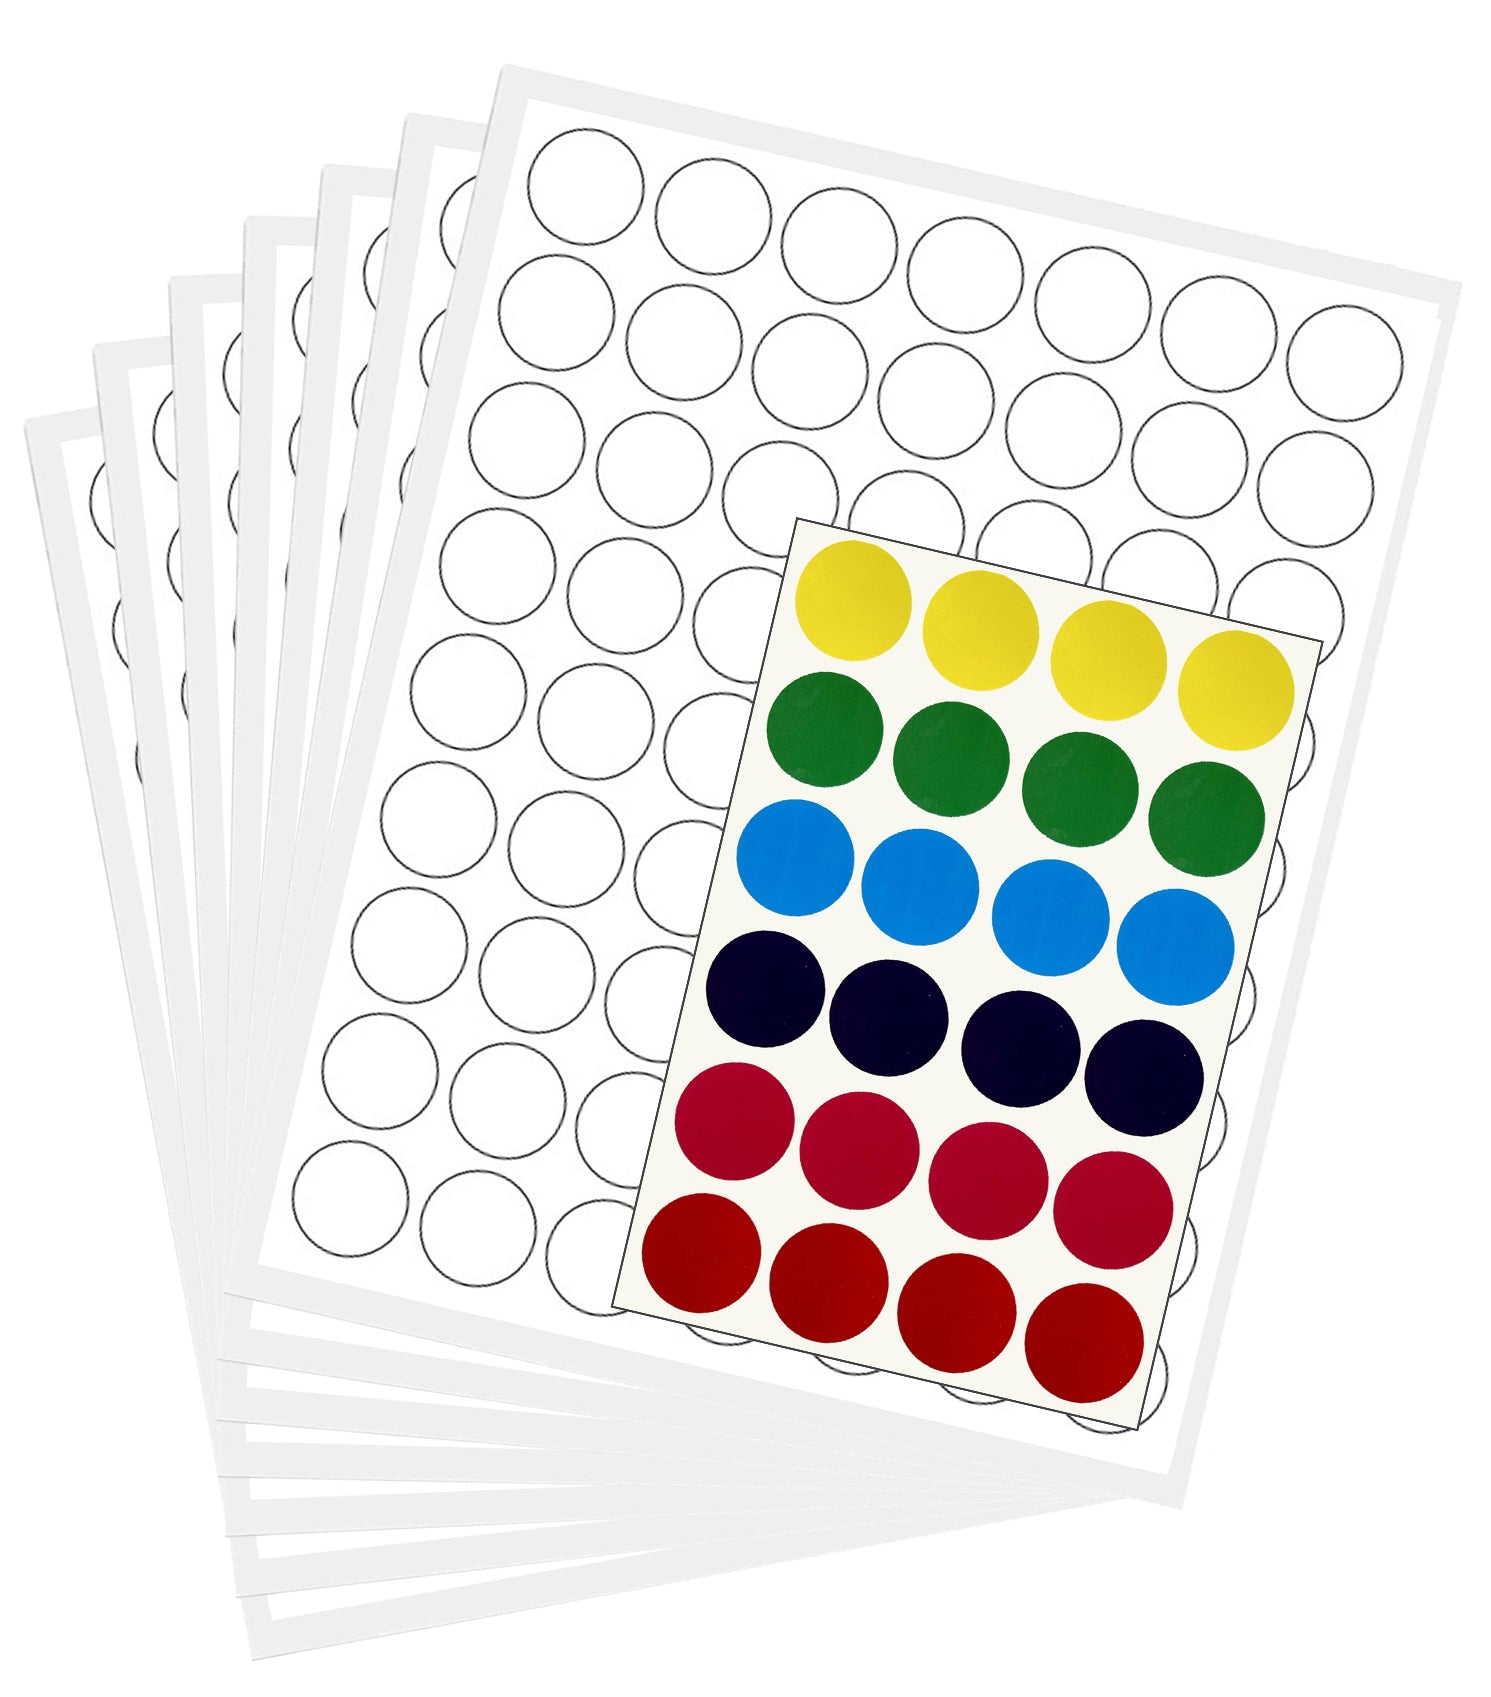 Printable Sticker Paper Sheets for Inkjet/Laser Printers 1 Inch